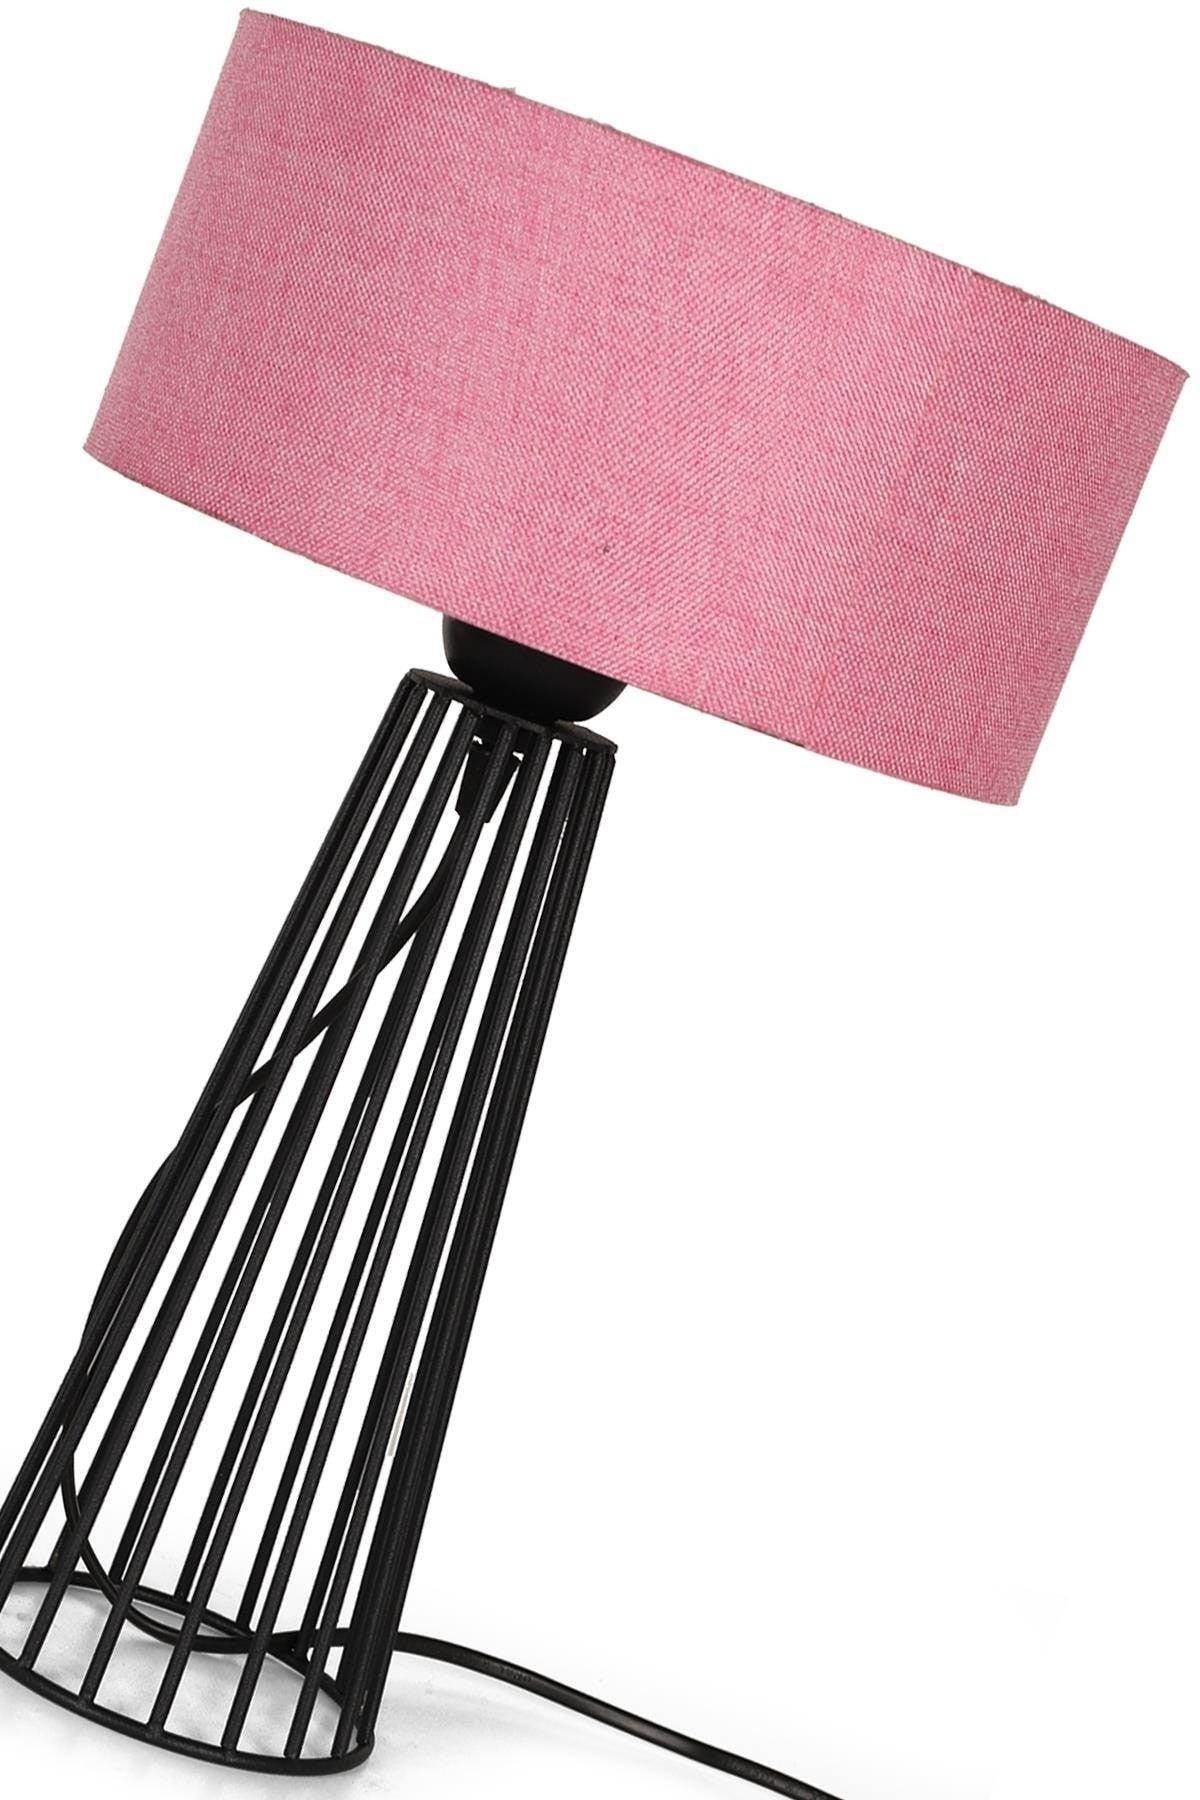 Philippine Table Lamp Black Pink Hat - Swordslife